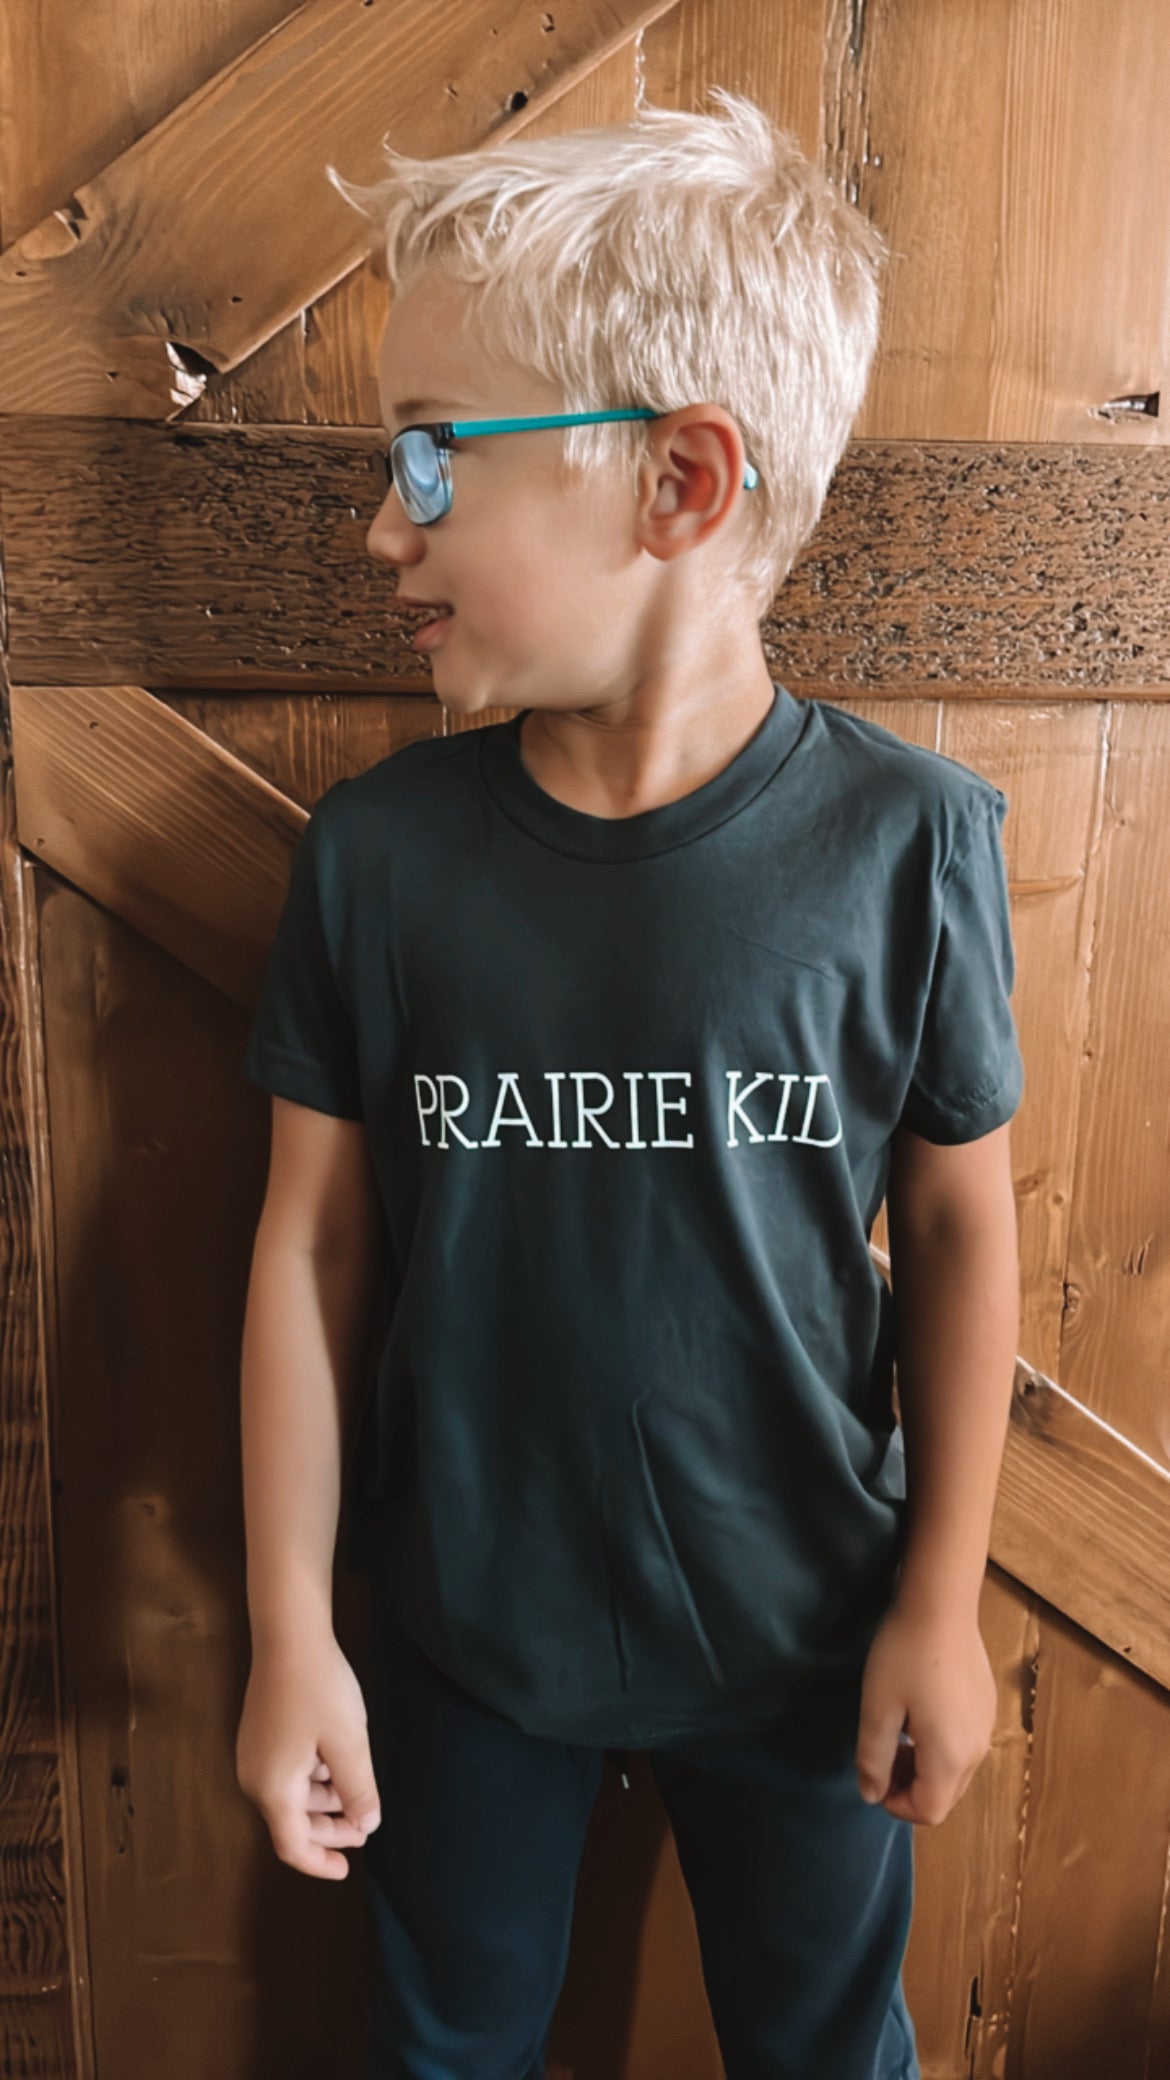 PRAIRIE KID Youth T-shirt